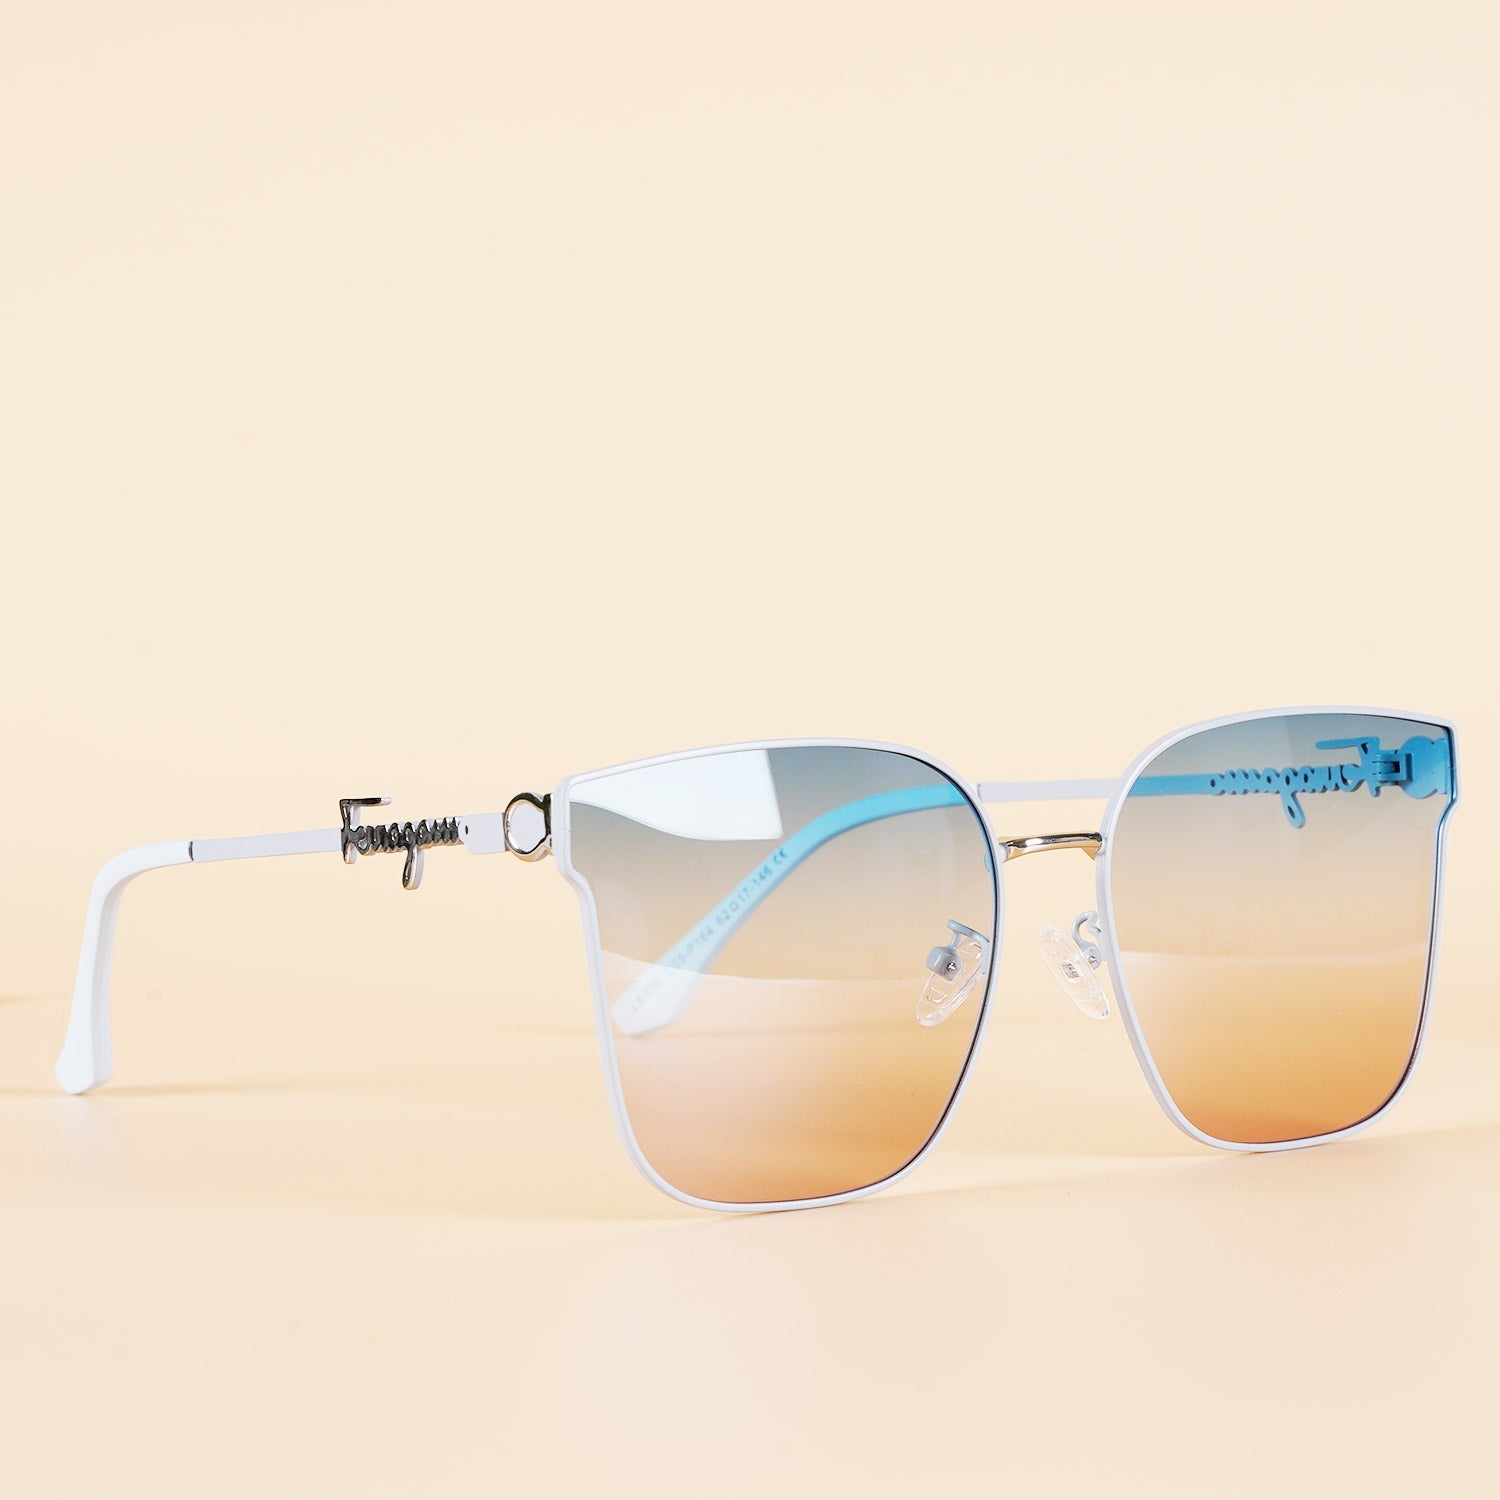 square sunglasses metal frame